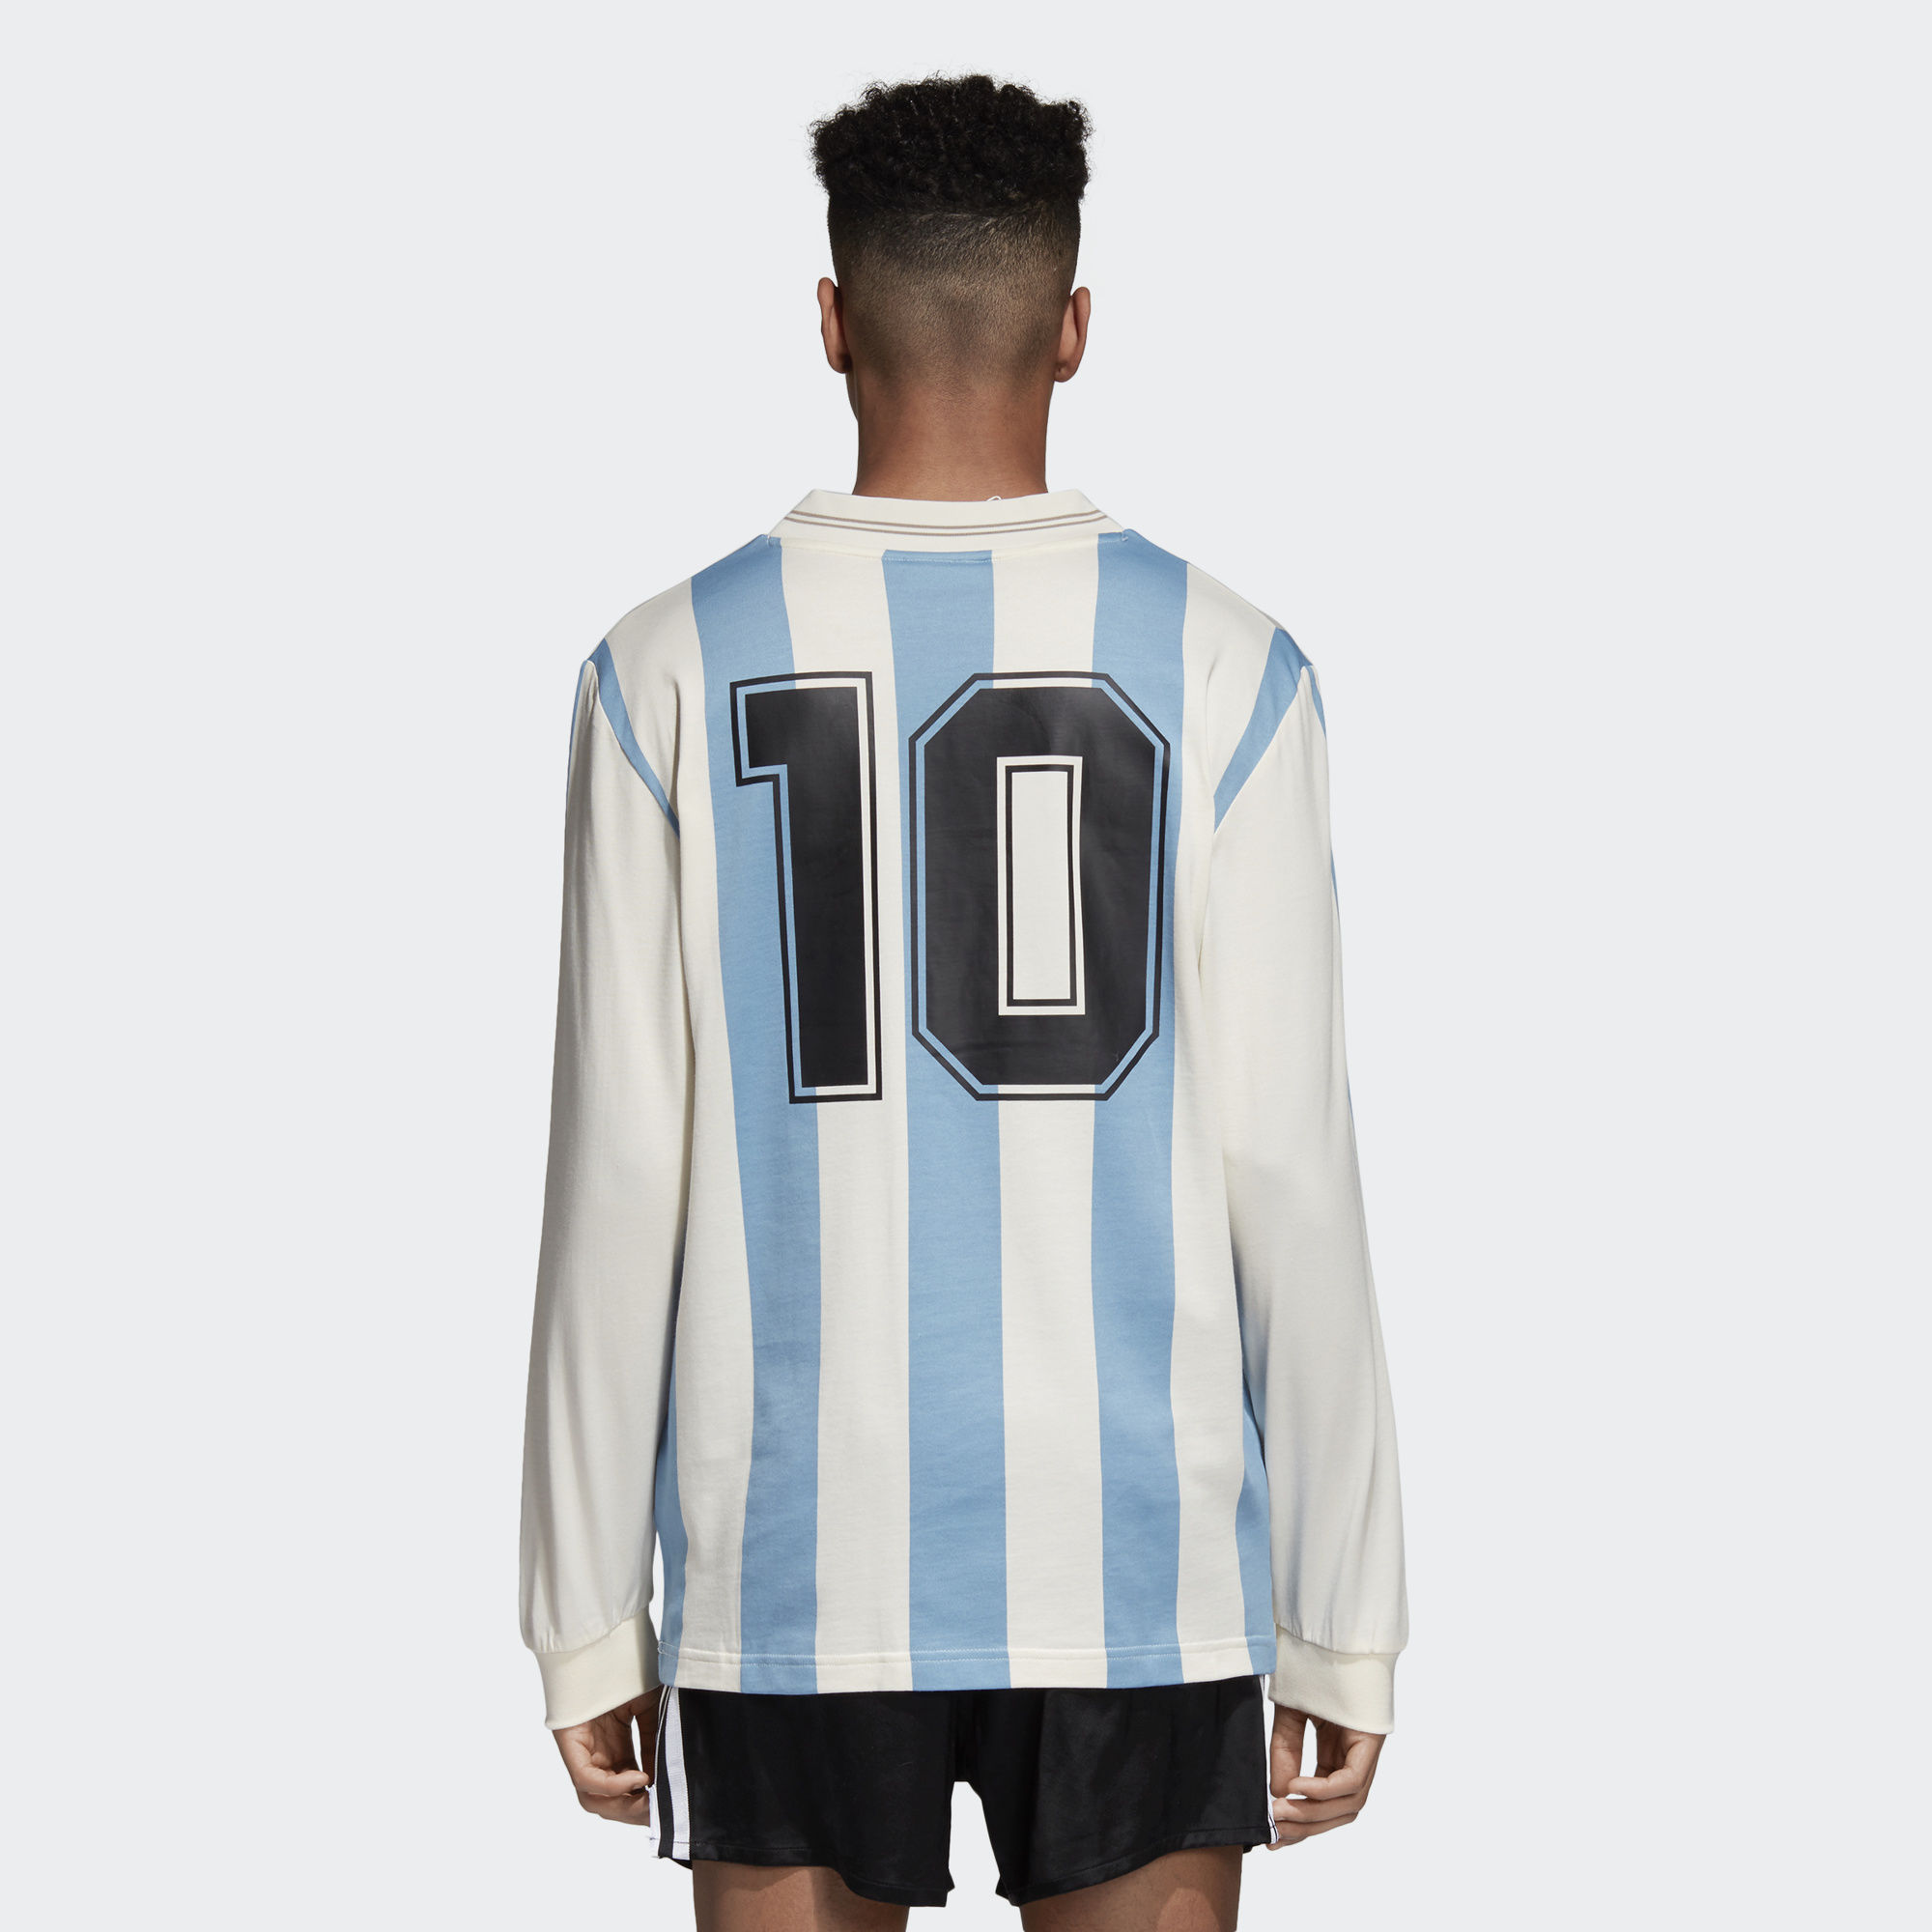 adidas originals argentina jersey